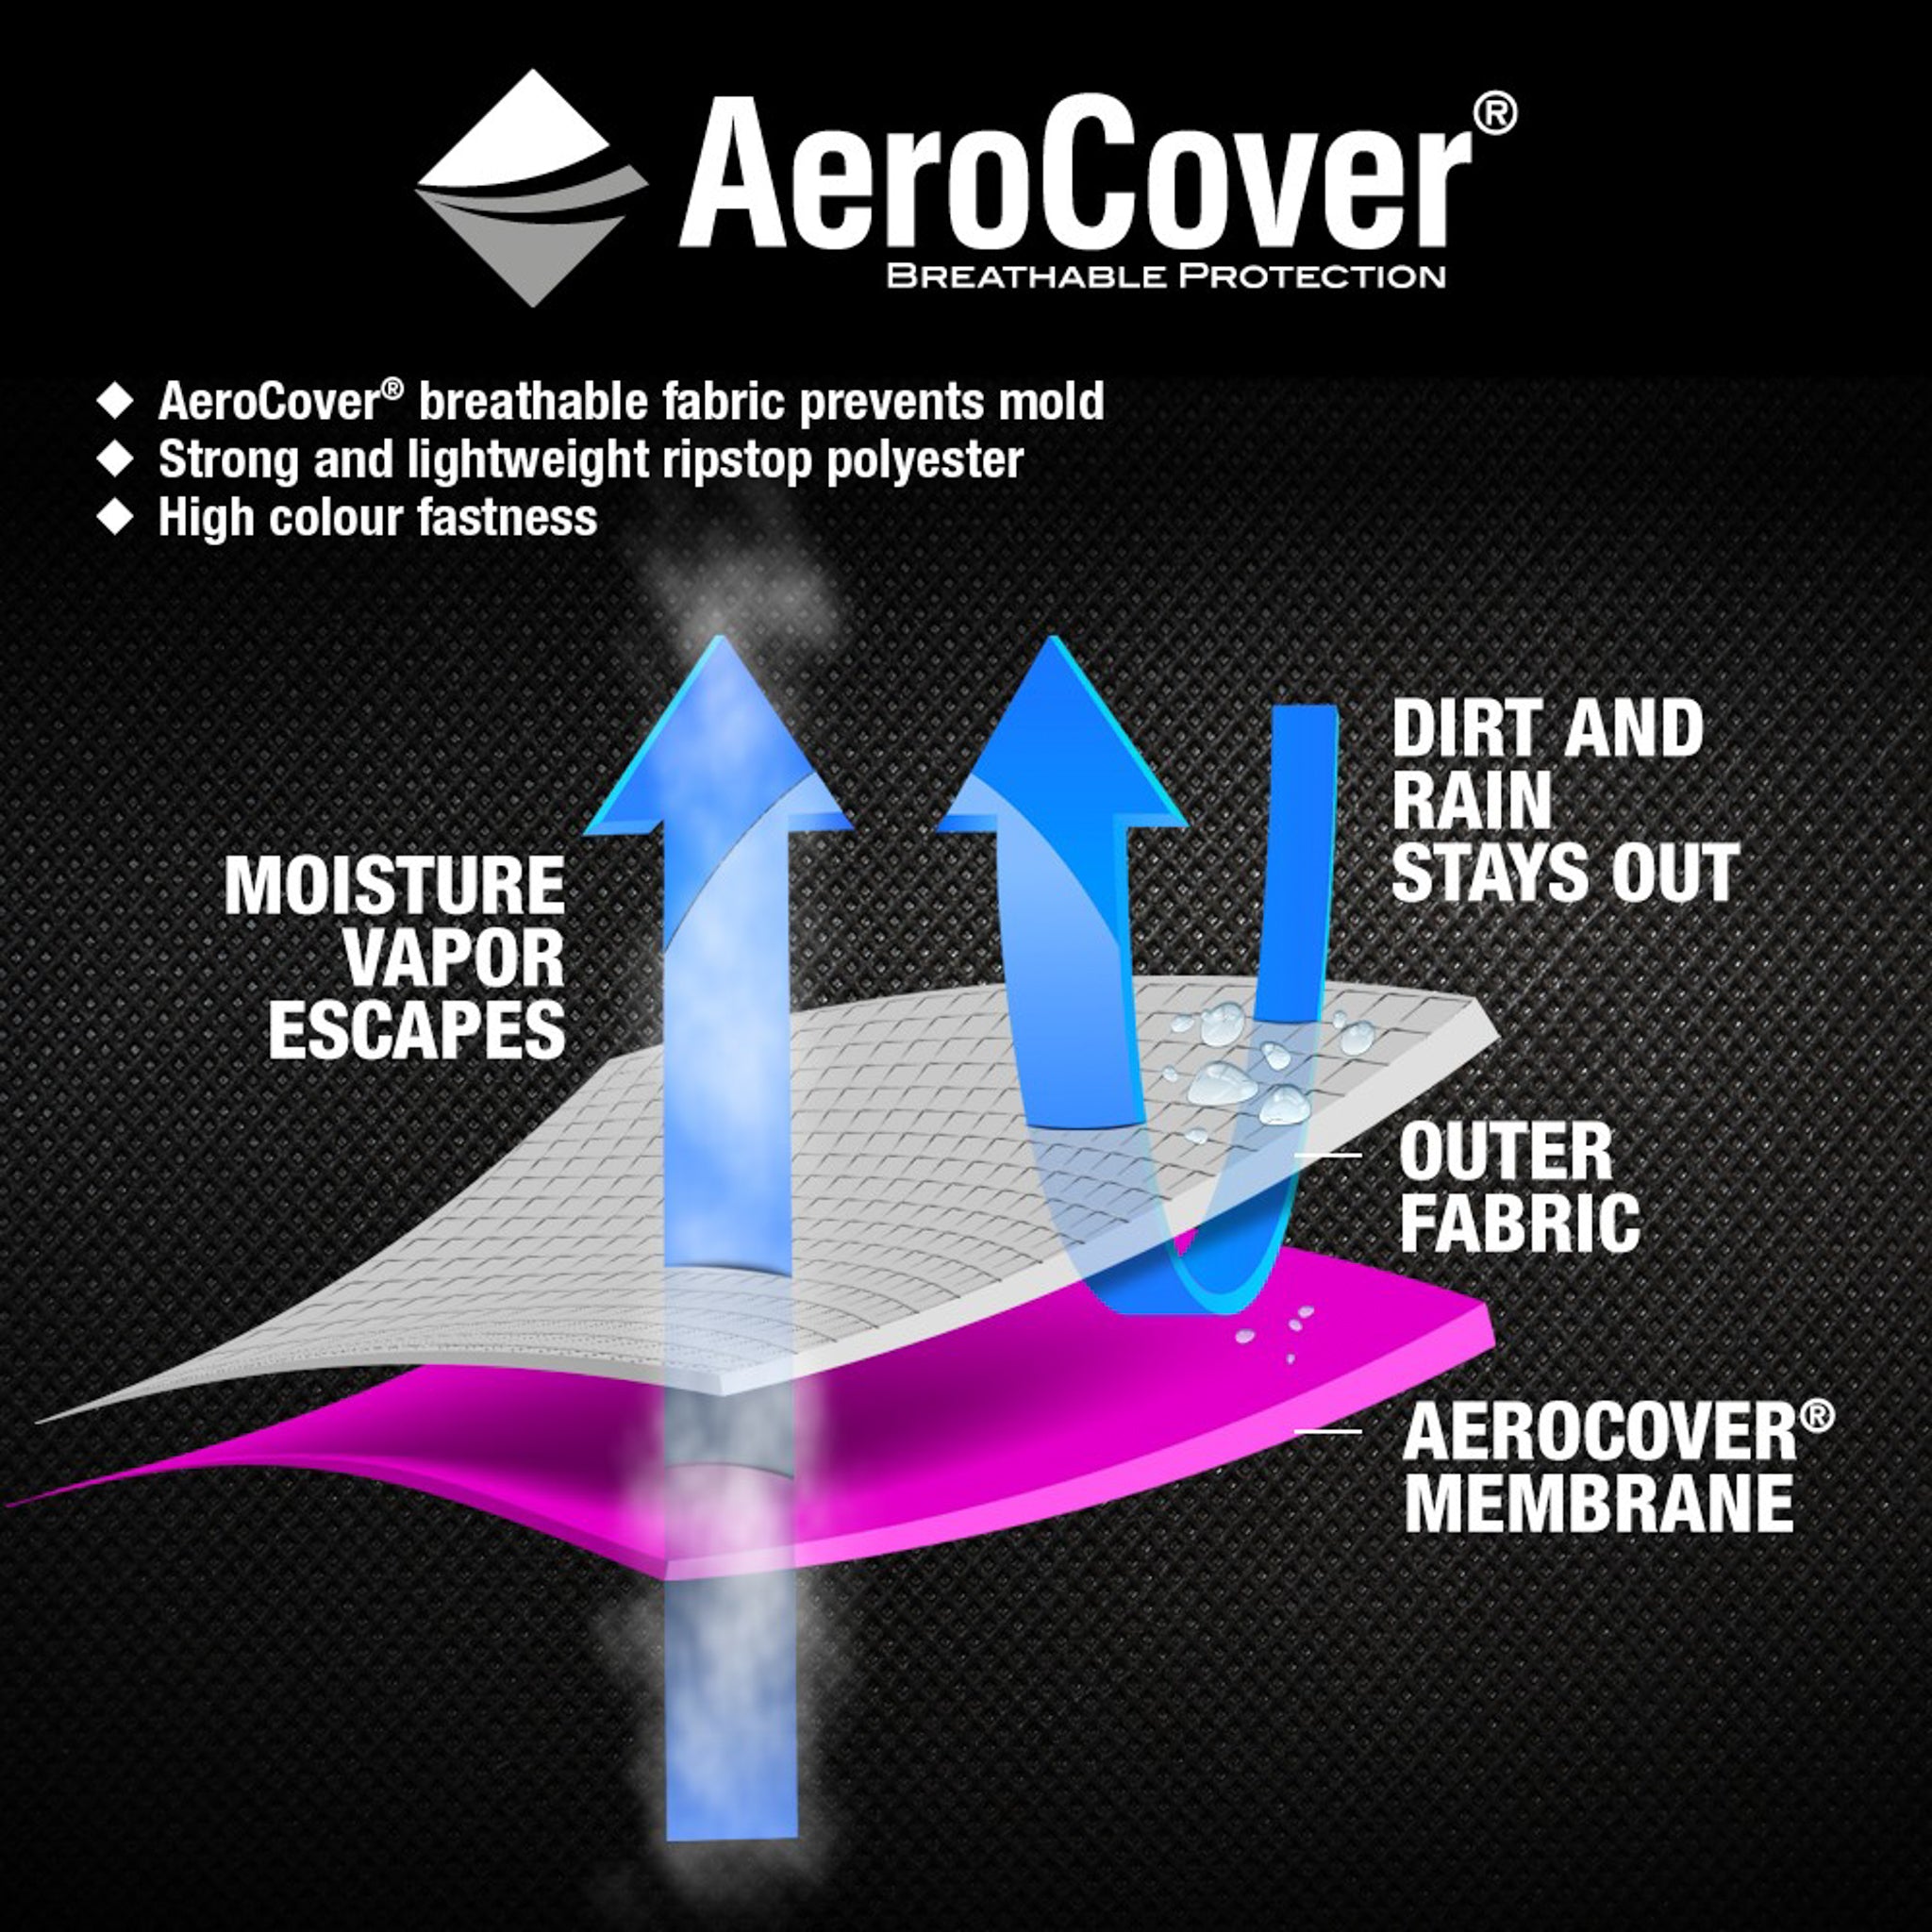 AeroCover - Firetable Round 65x45cm high